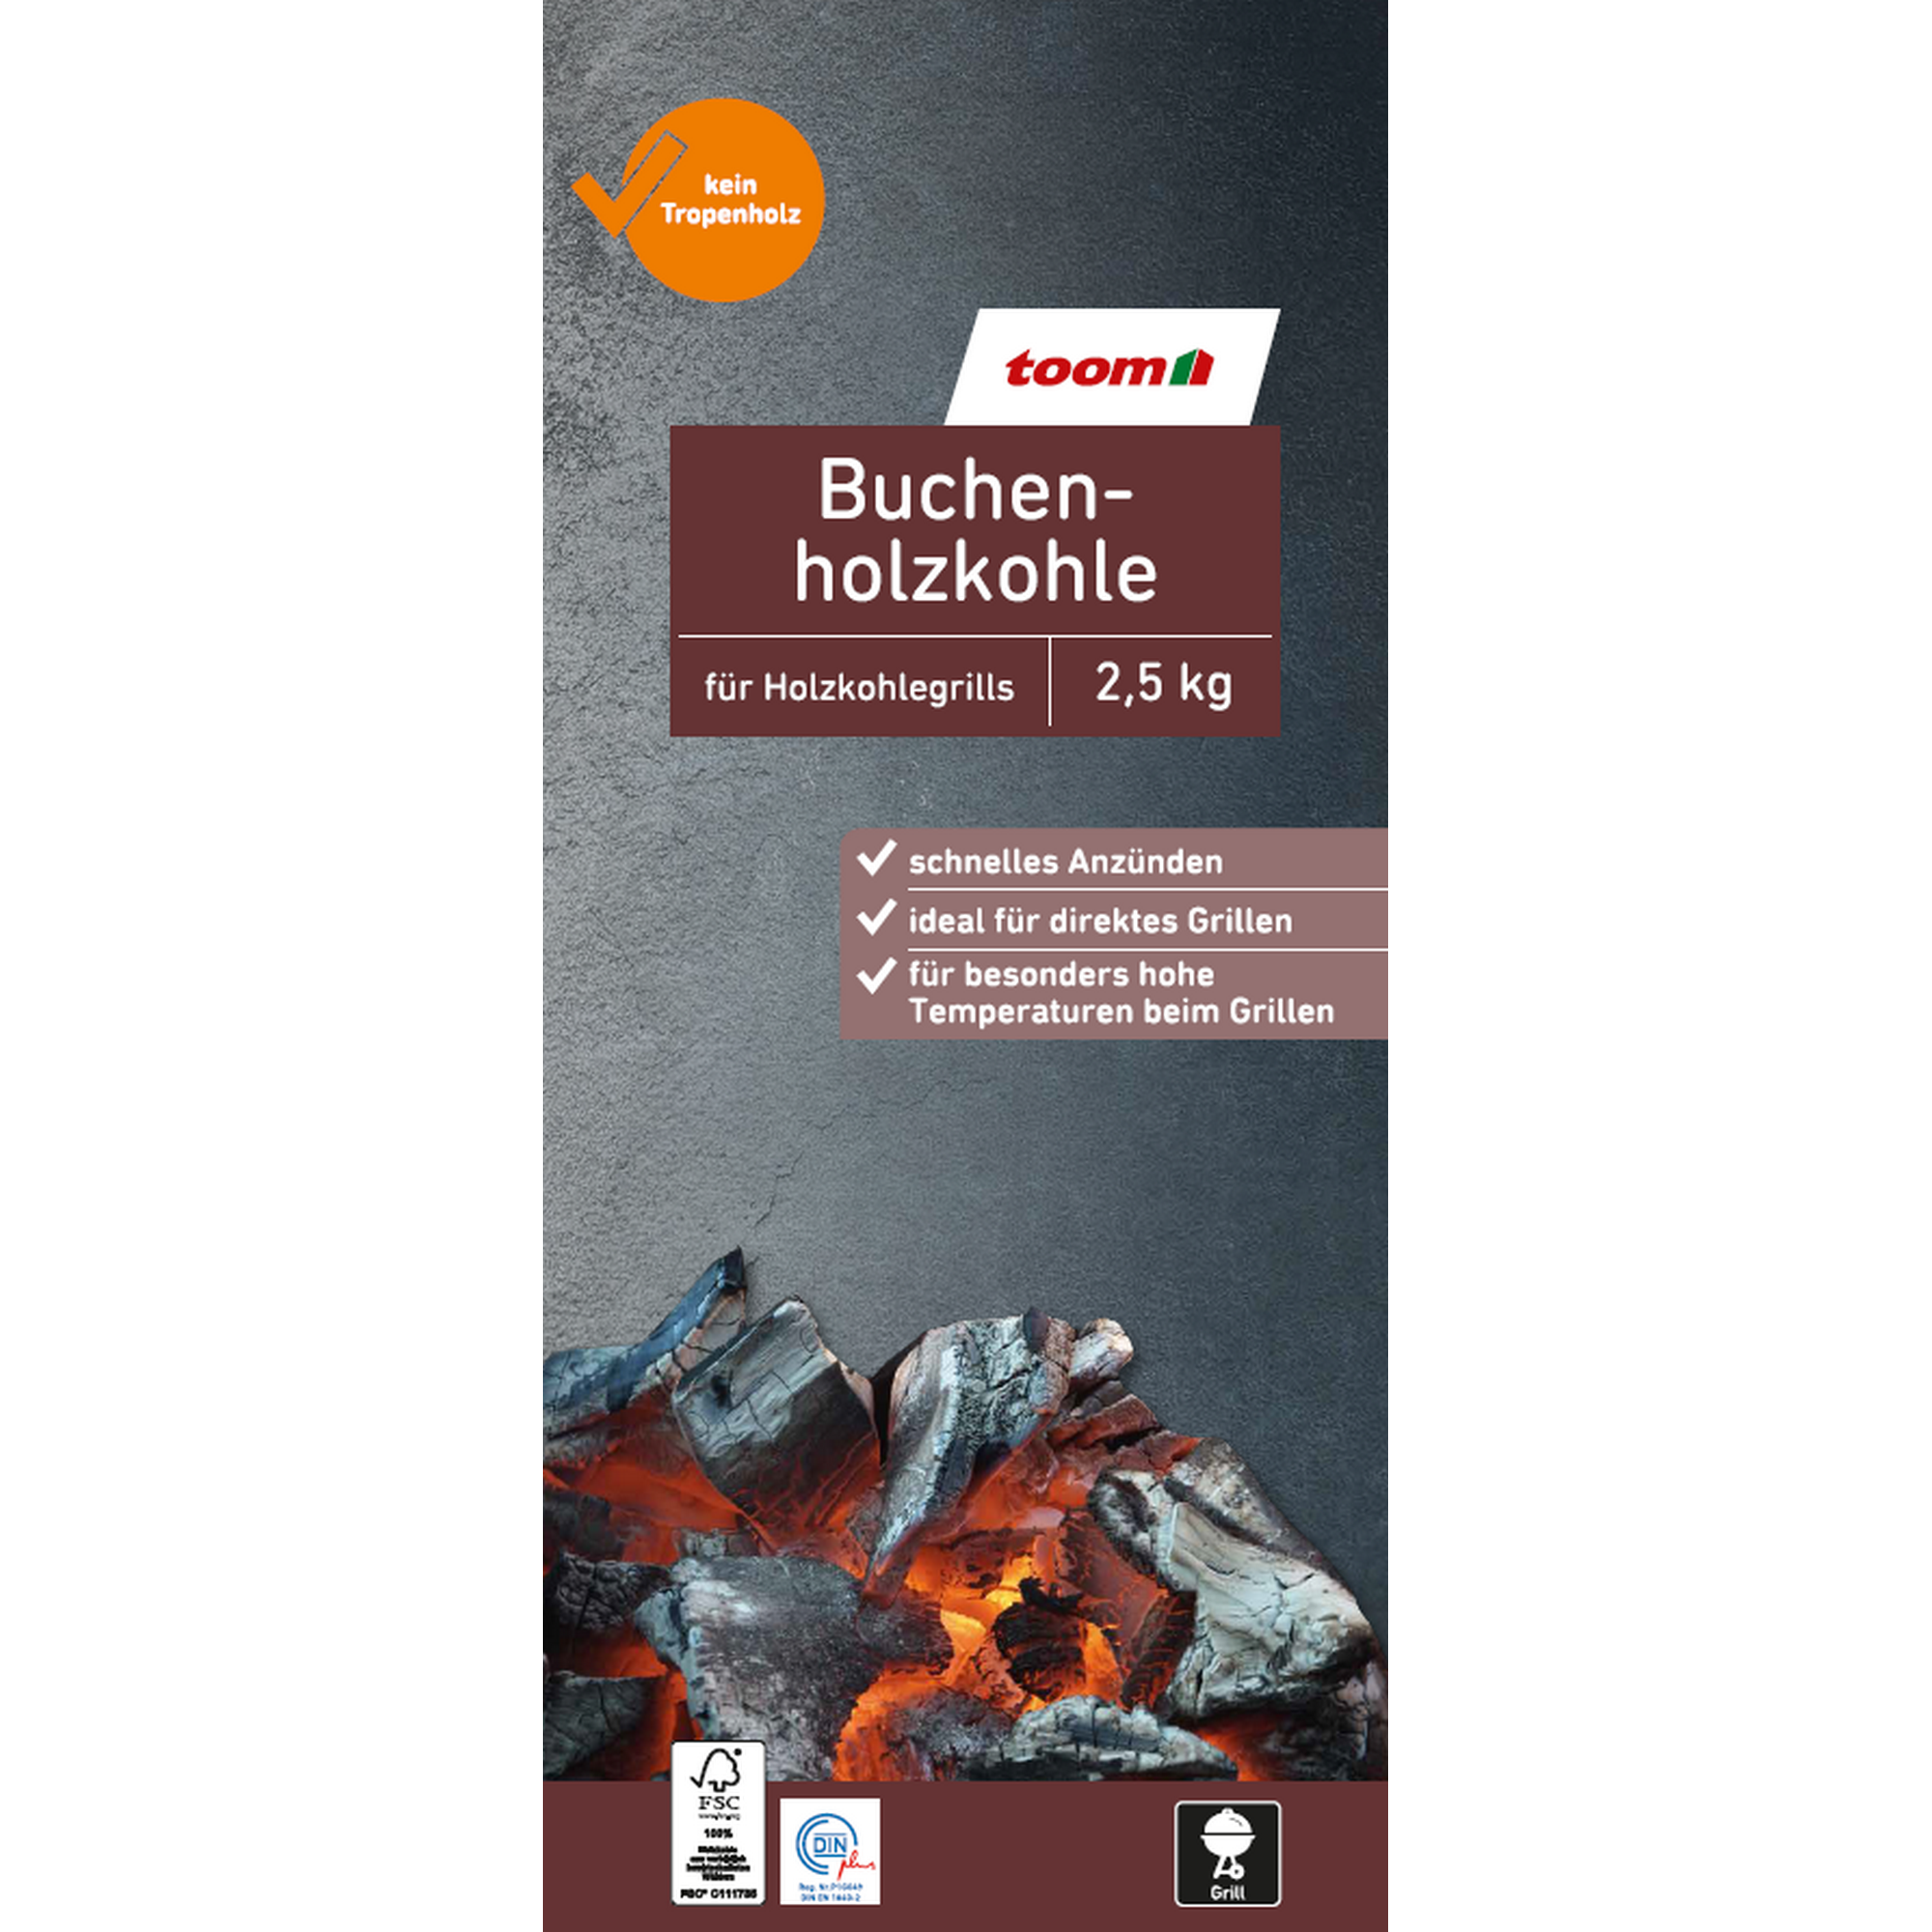 Buchenholzkohle 2,5 kg + product picture